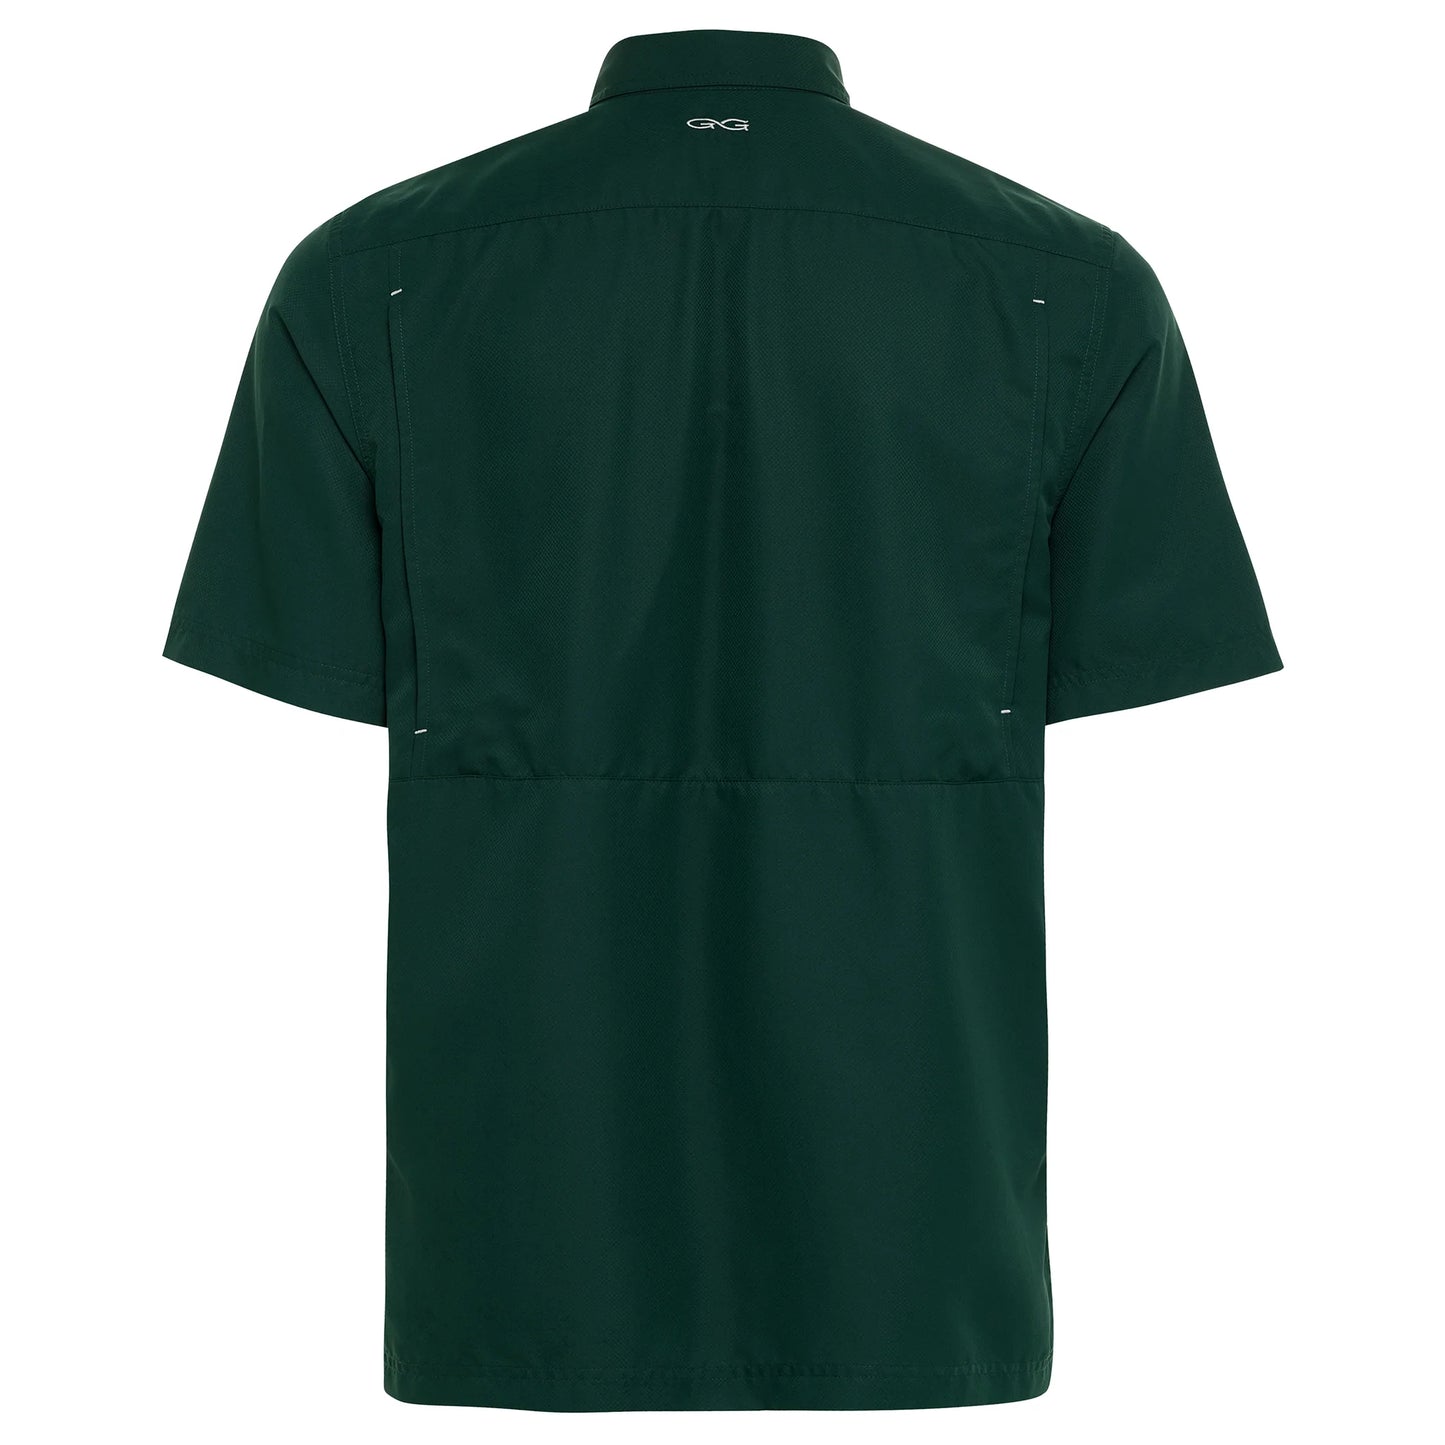 GameGuard Mallard Green MicroFiber Shirt